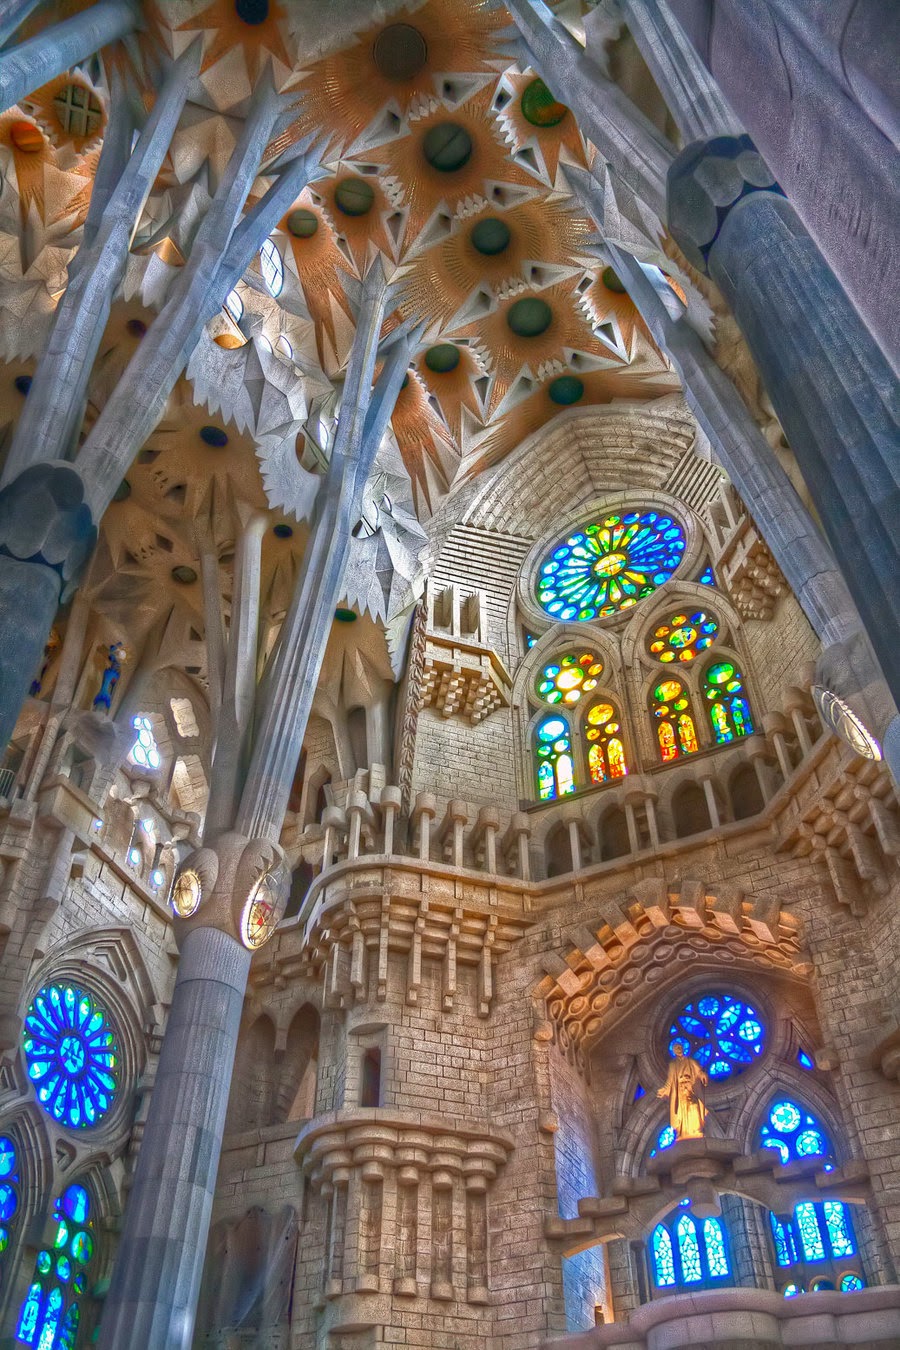 arthinks: Illuminated Wall Decorations In Sagrada Familia By Antoni Gaudi